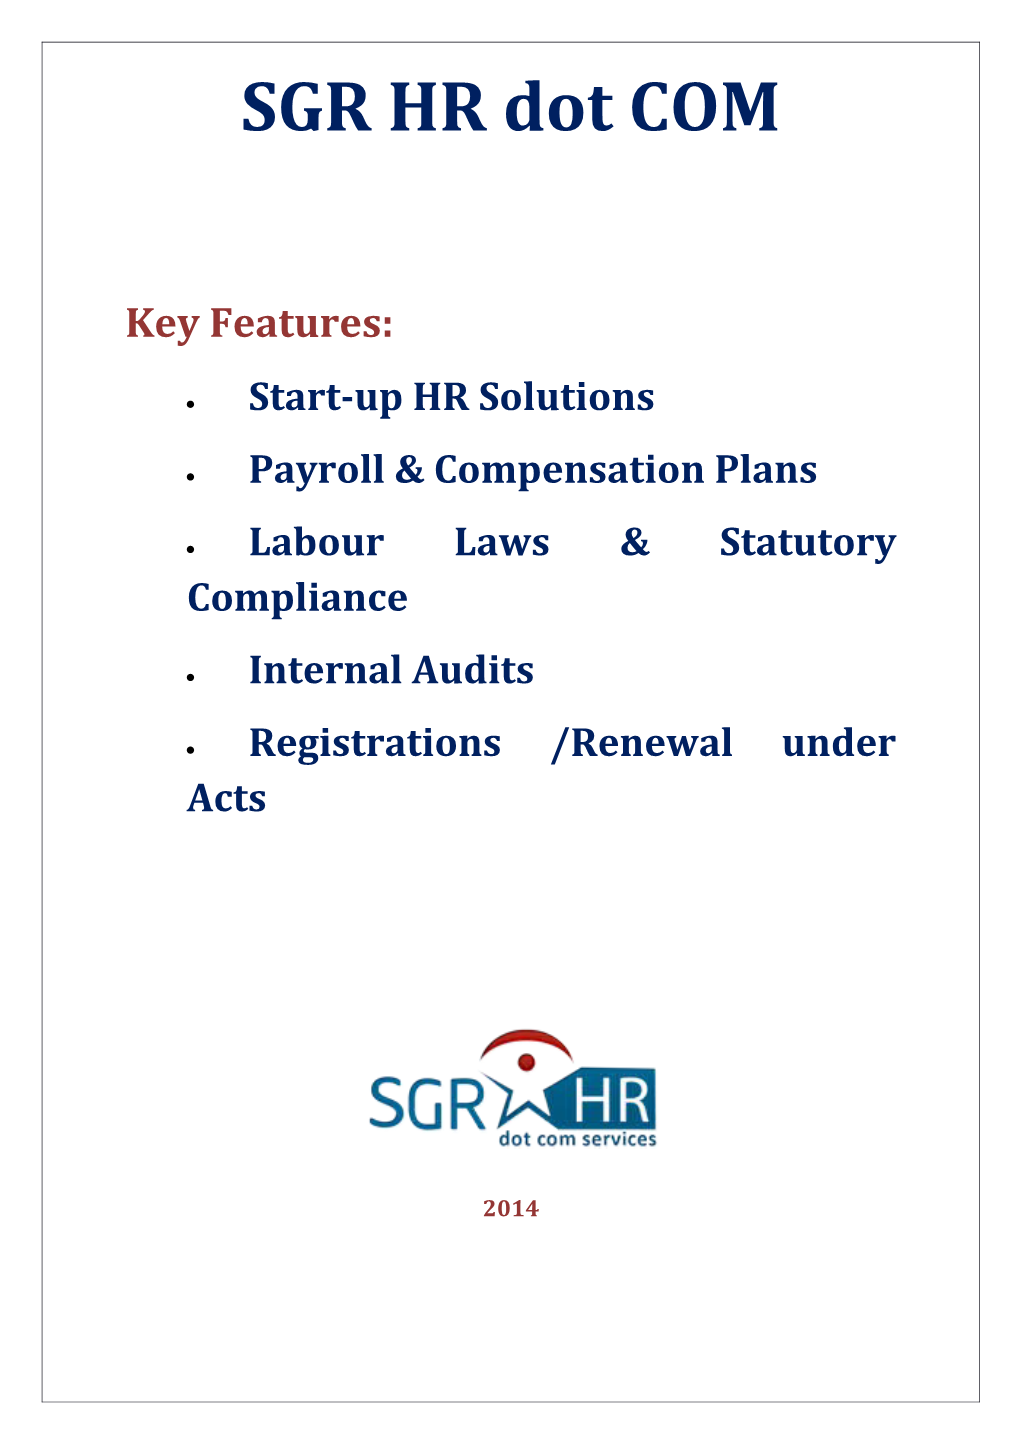 Sgr HR Dot COM Services